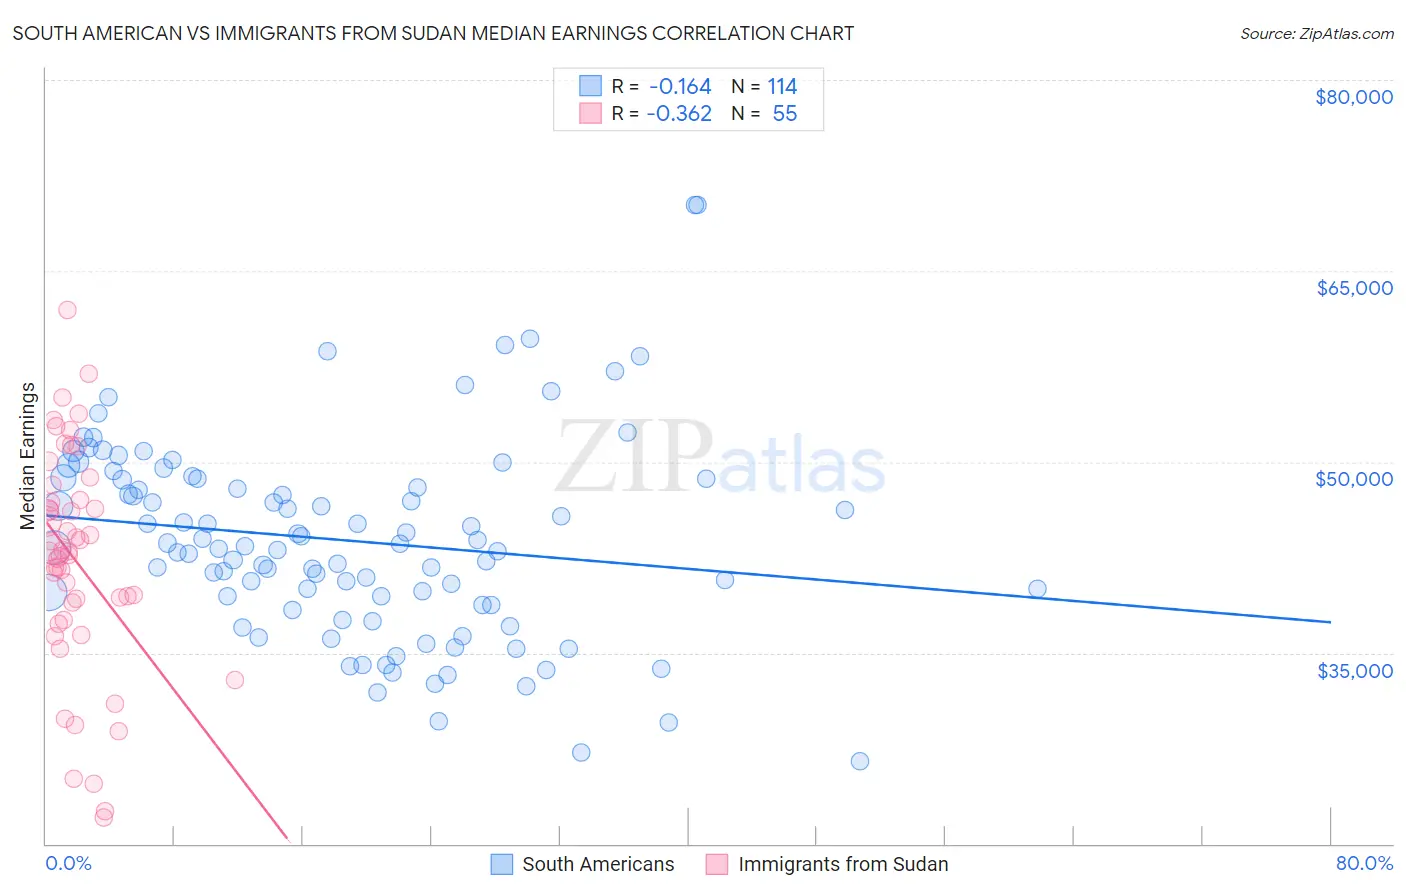 South American vs Immigrants from Sudan Median Earnings